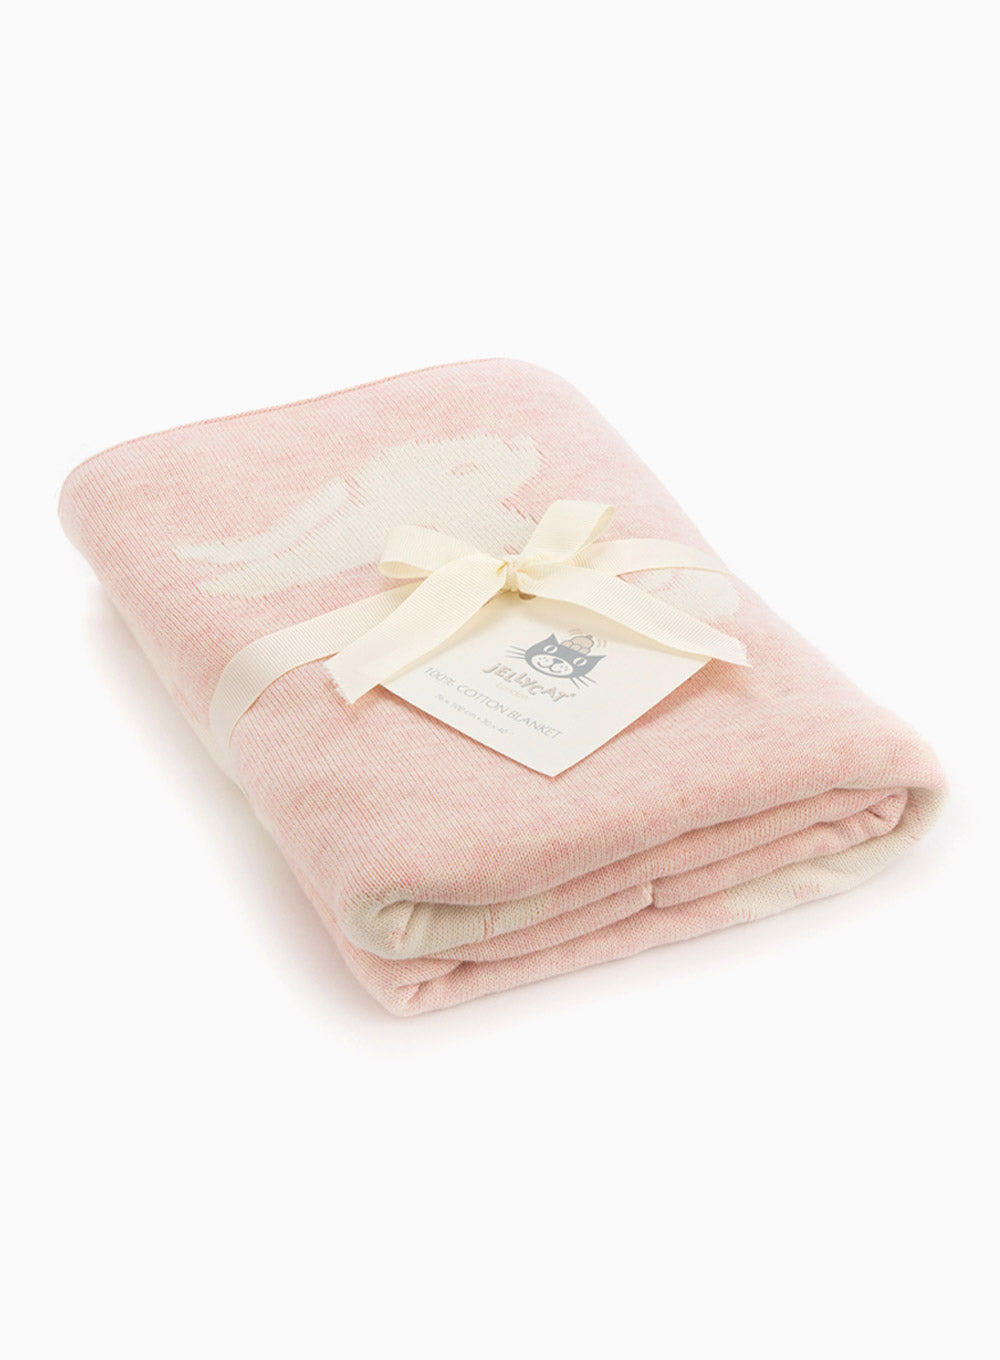 Jellycat Bunny Blanket in Pink